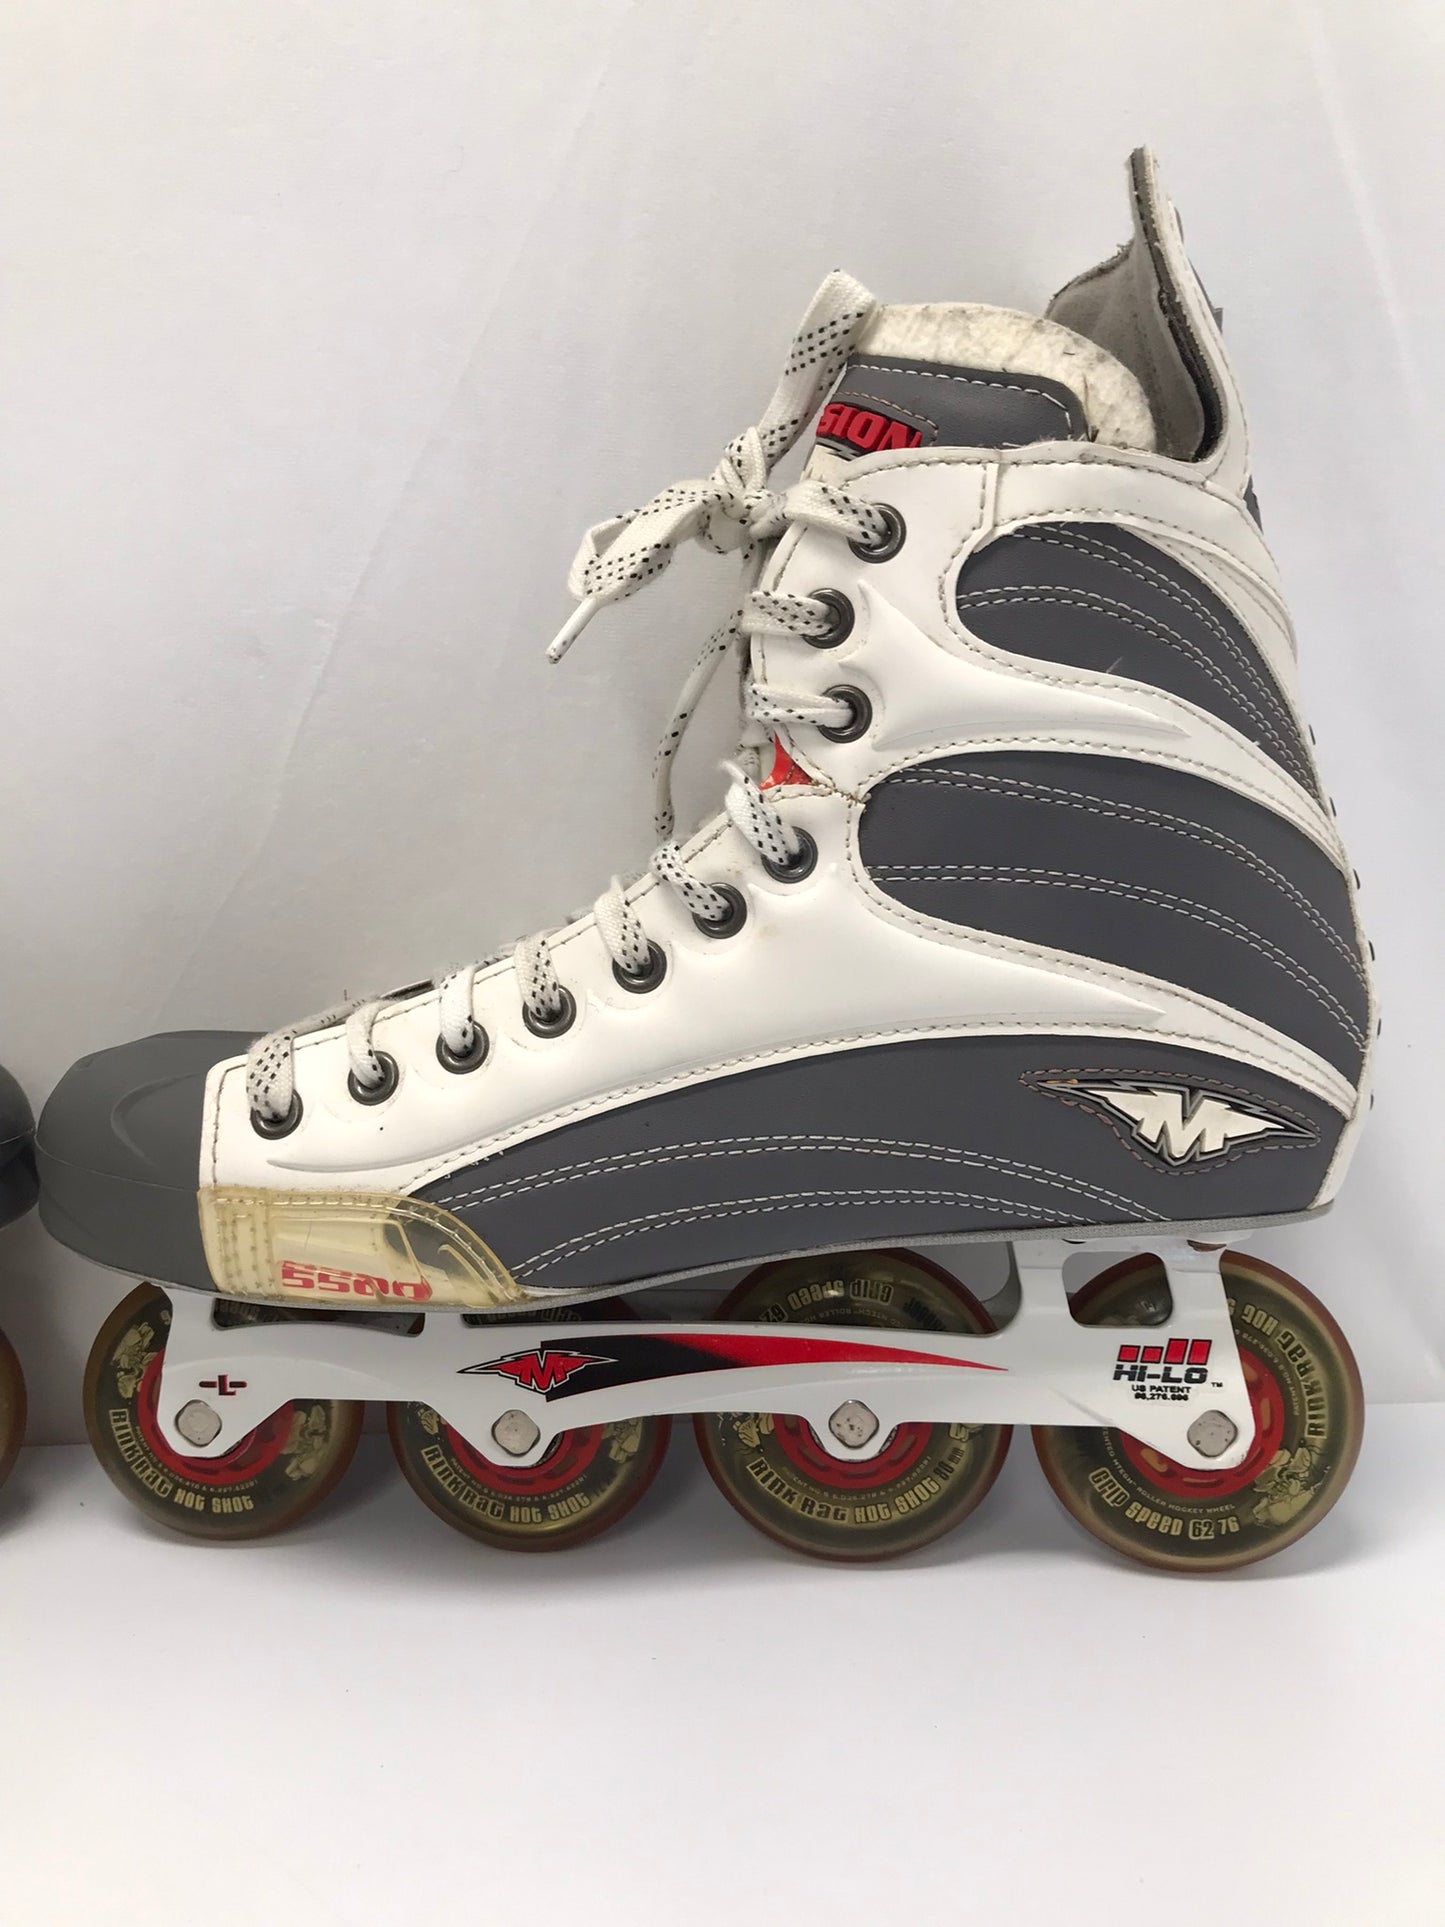 Hockey Roller Hockey Skates Men's Size 13 Shoe Size Mission 5500 Helium As New